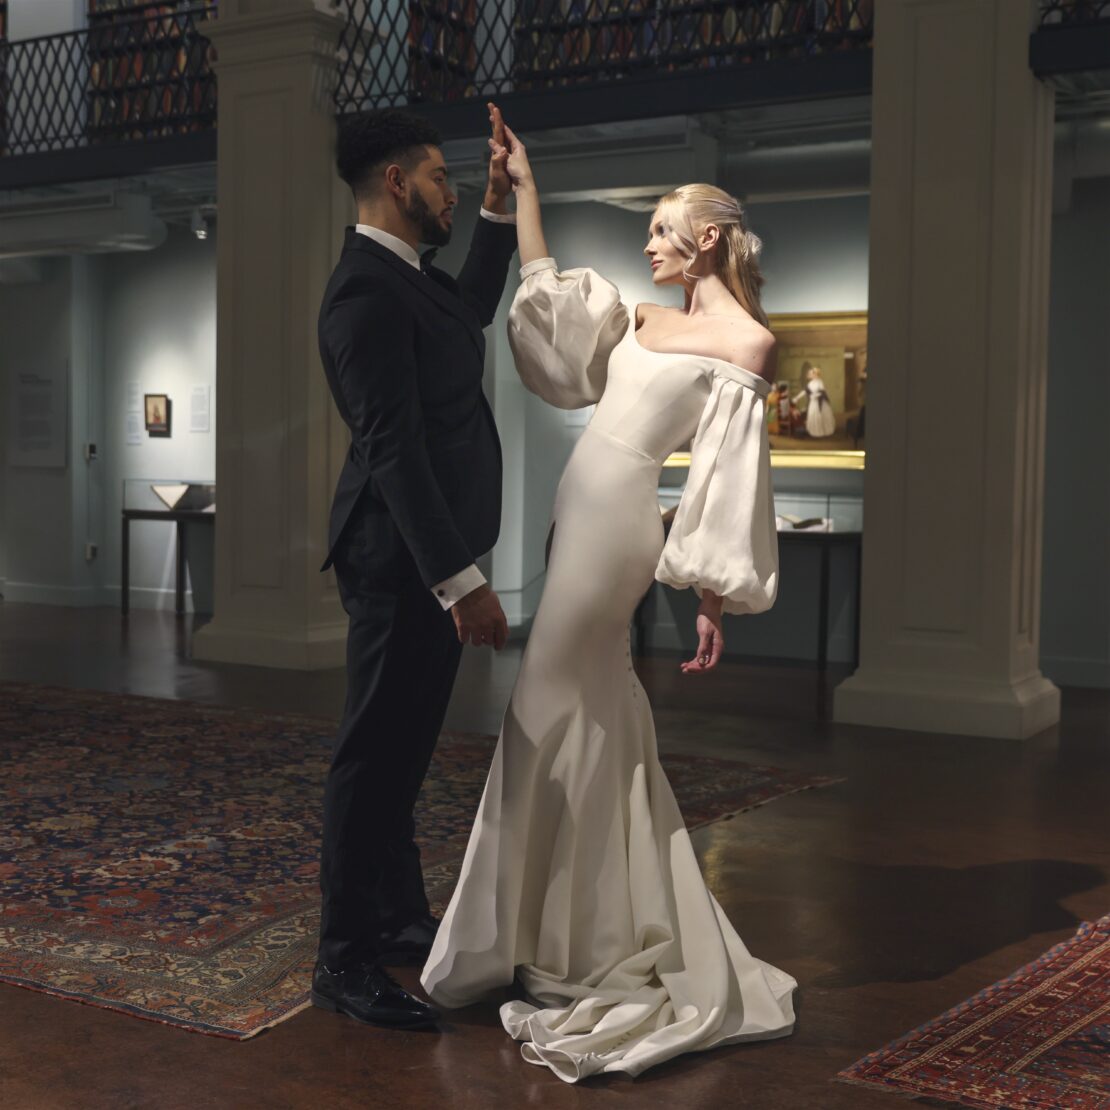 Boston Athenaeum wedding photoshoot behind the scenes